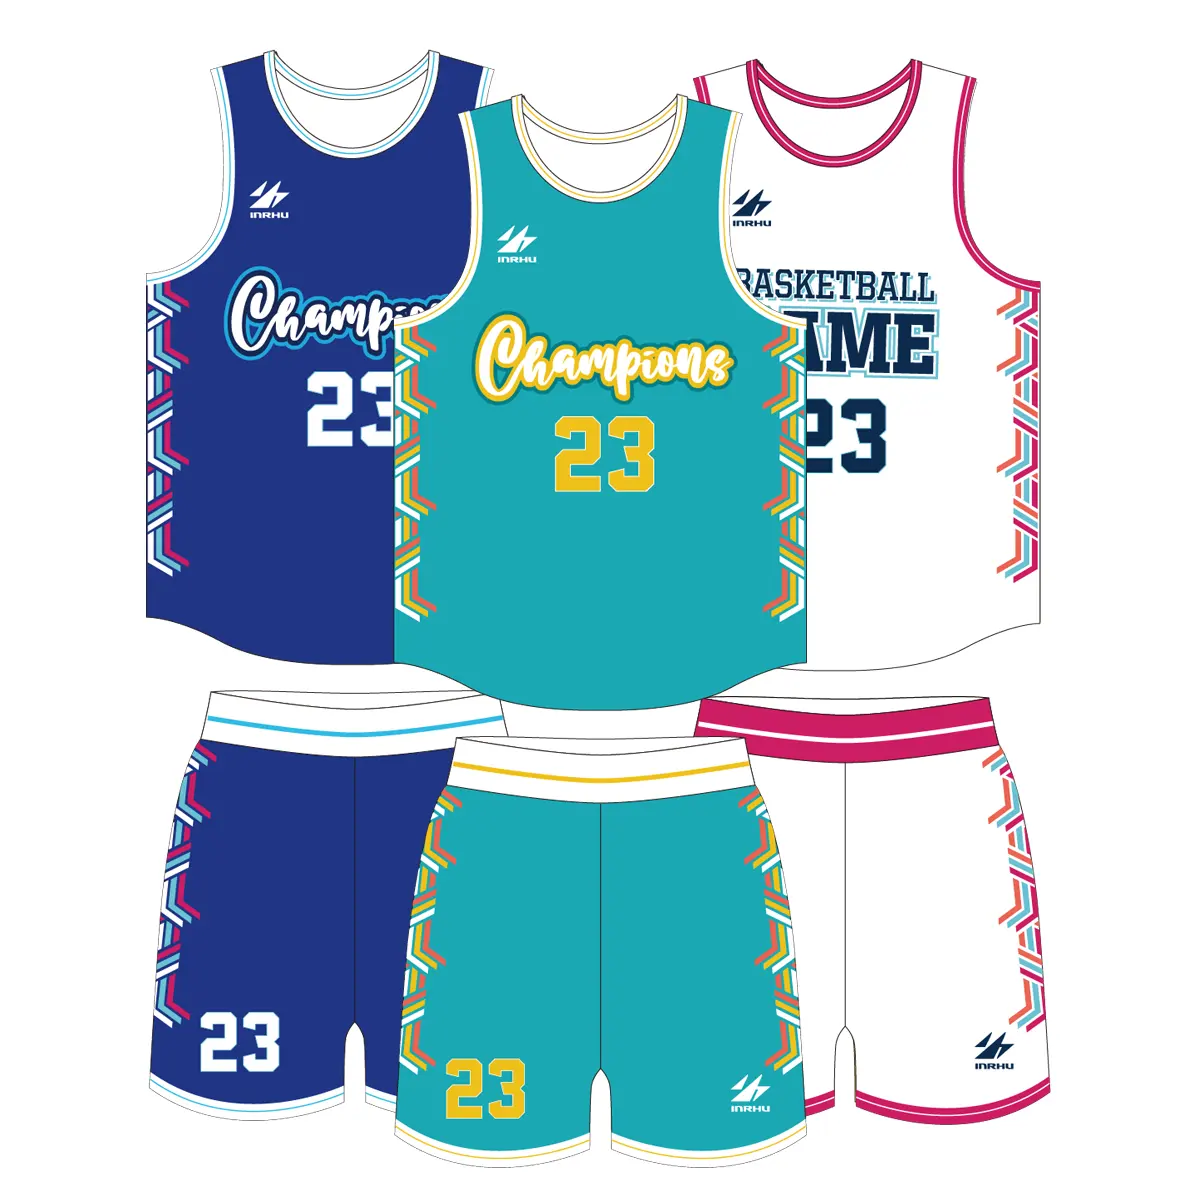 Cheap High-quality Basketball Uniform Mesh Blank Basket Ball Jersey for Training Basketball Wear Customized Team Name